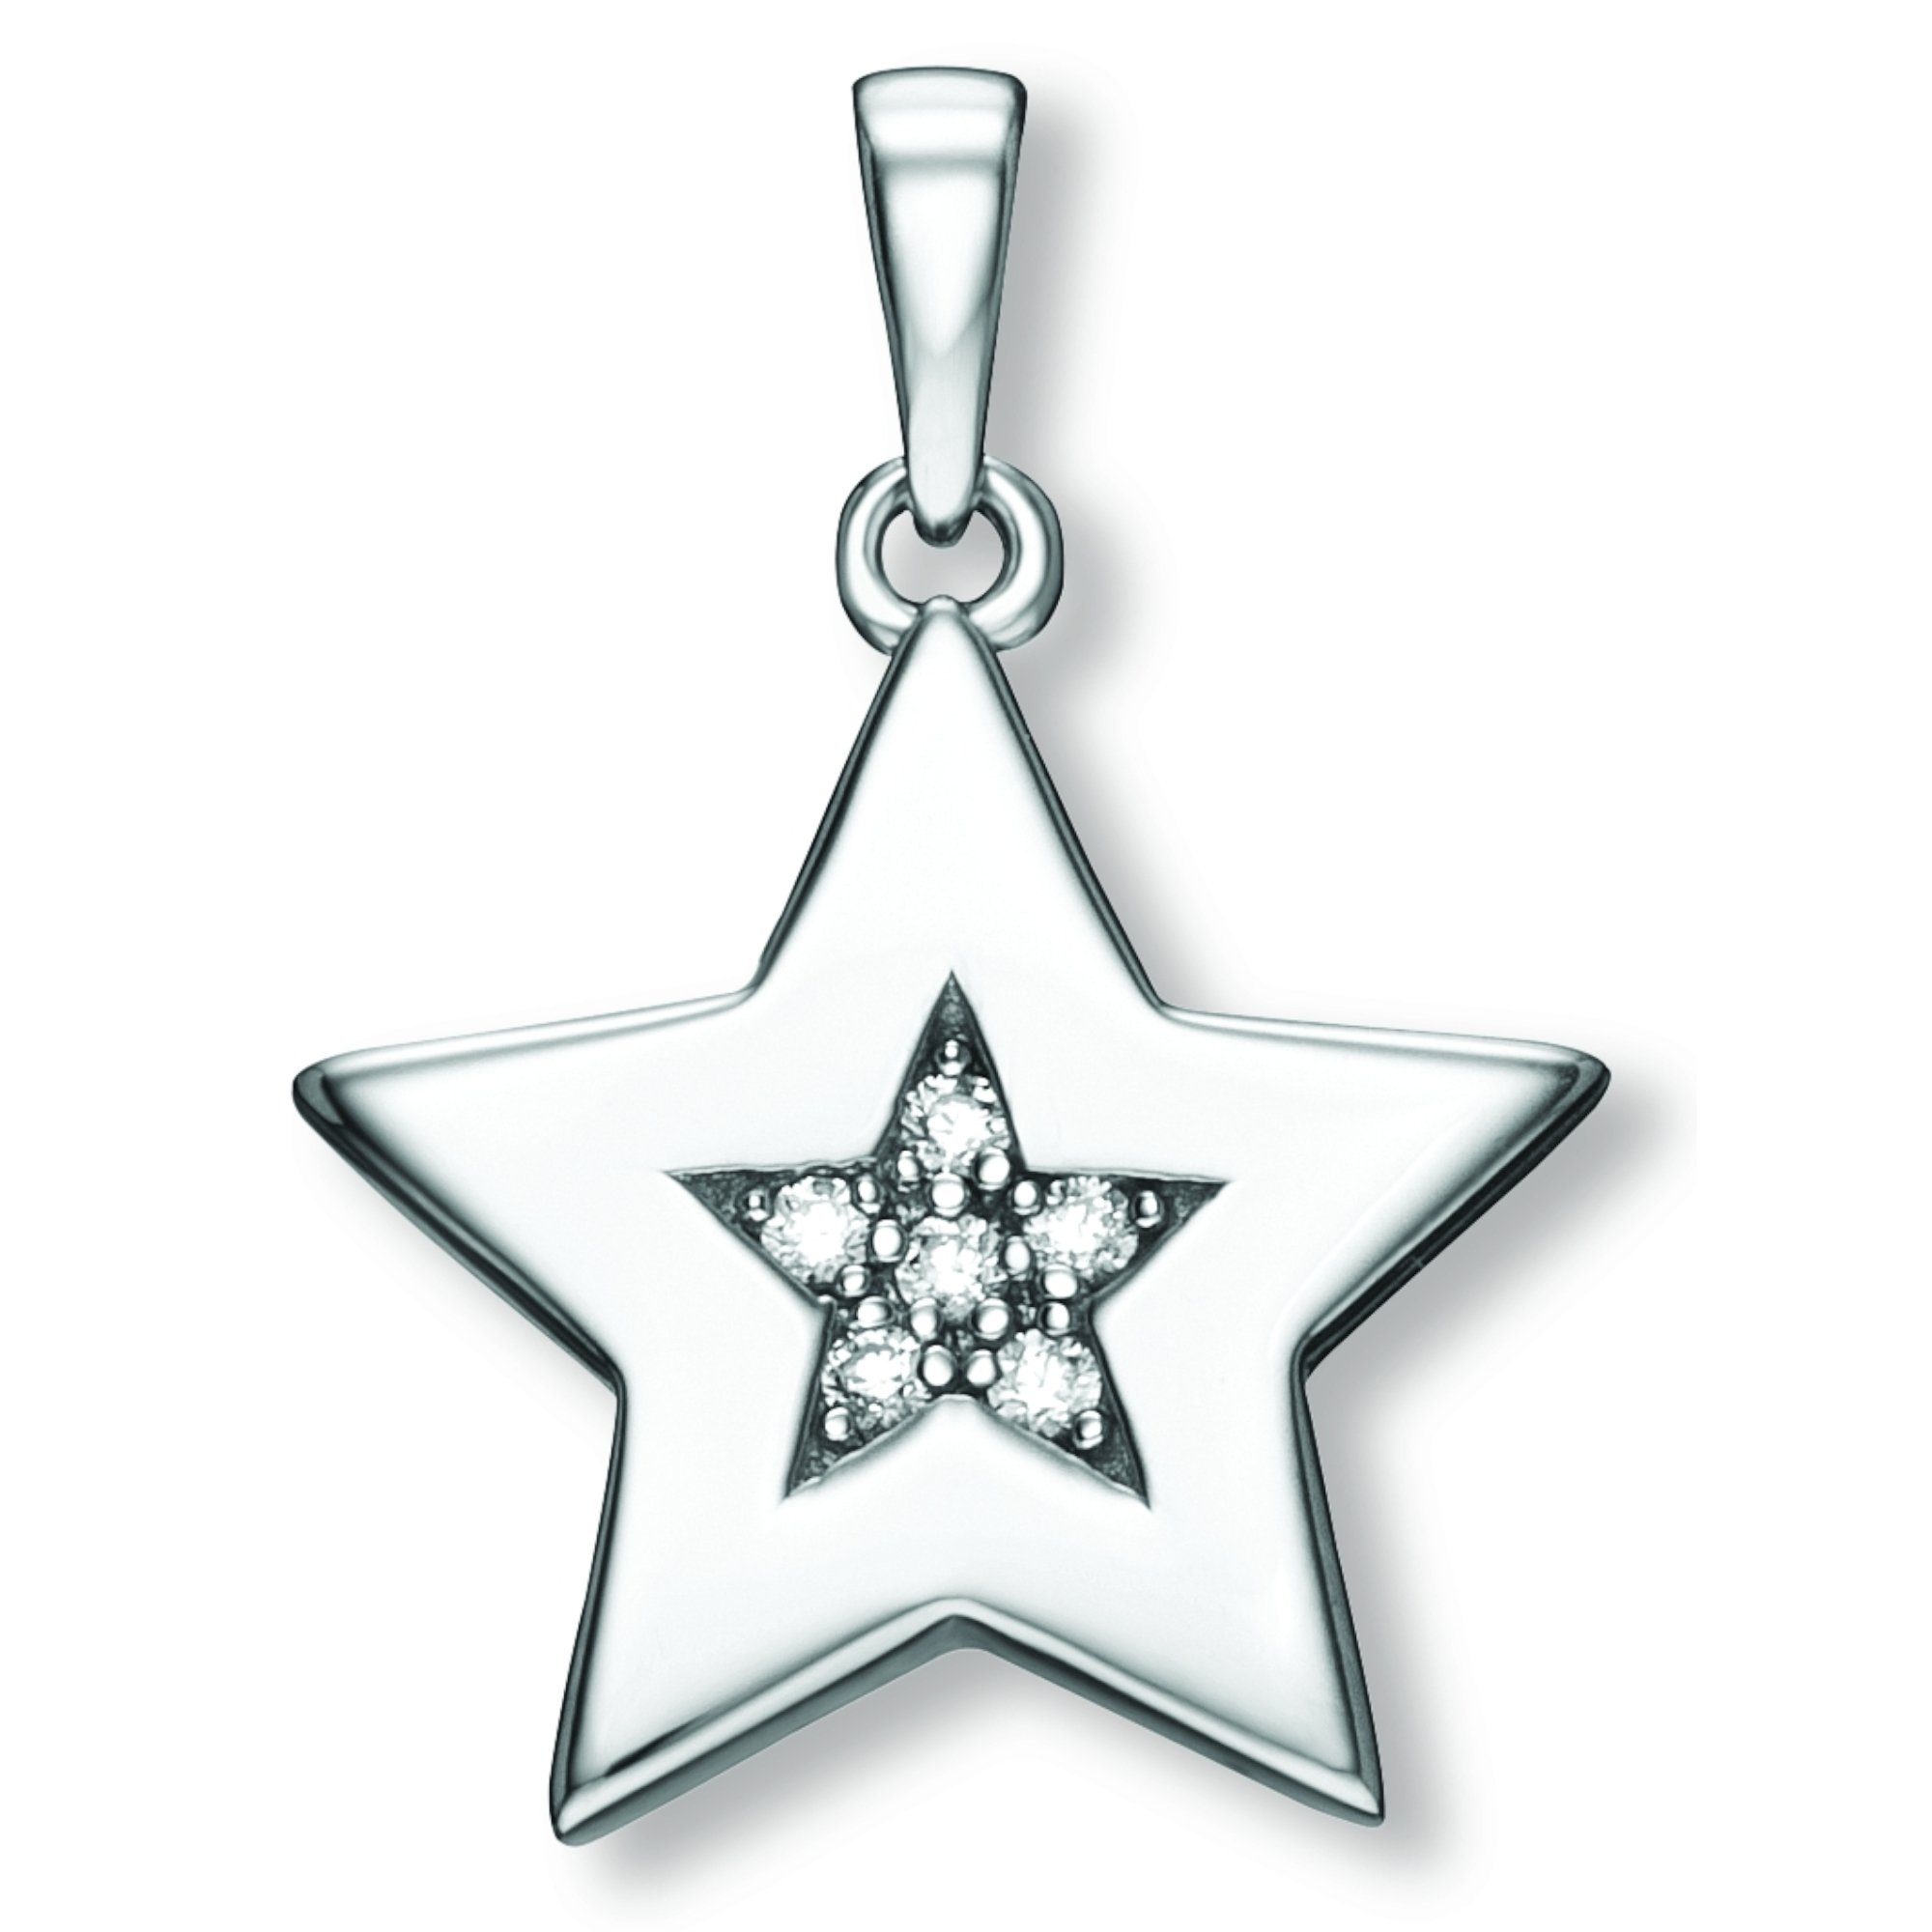 ONE ELEMENT Kettenanhänger Stern Stern Anhänger Silber Schmuck 925 Zirkonia Silber, aus Damen